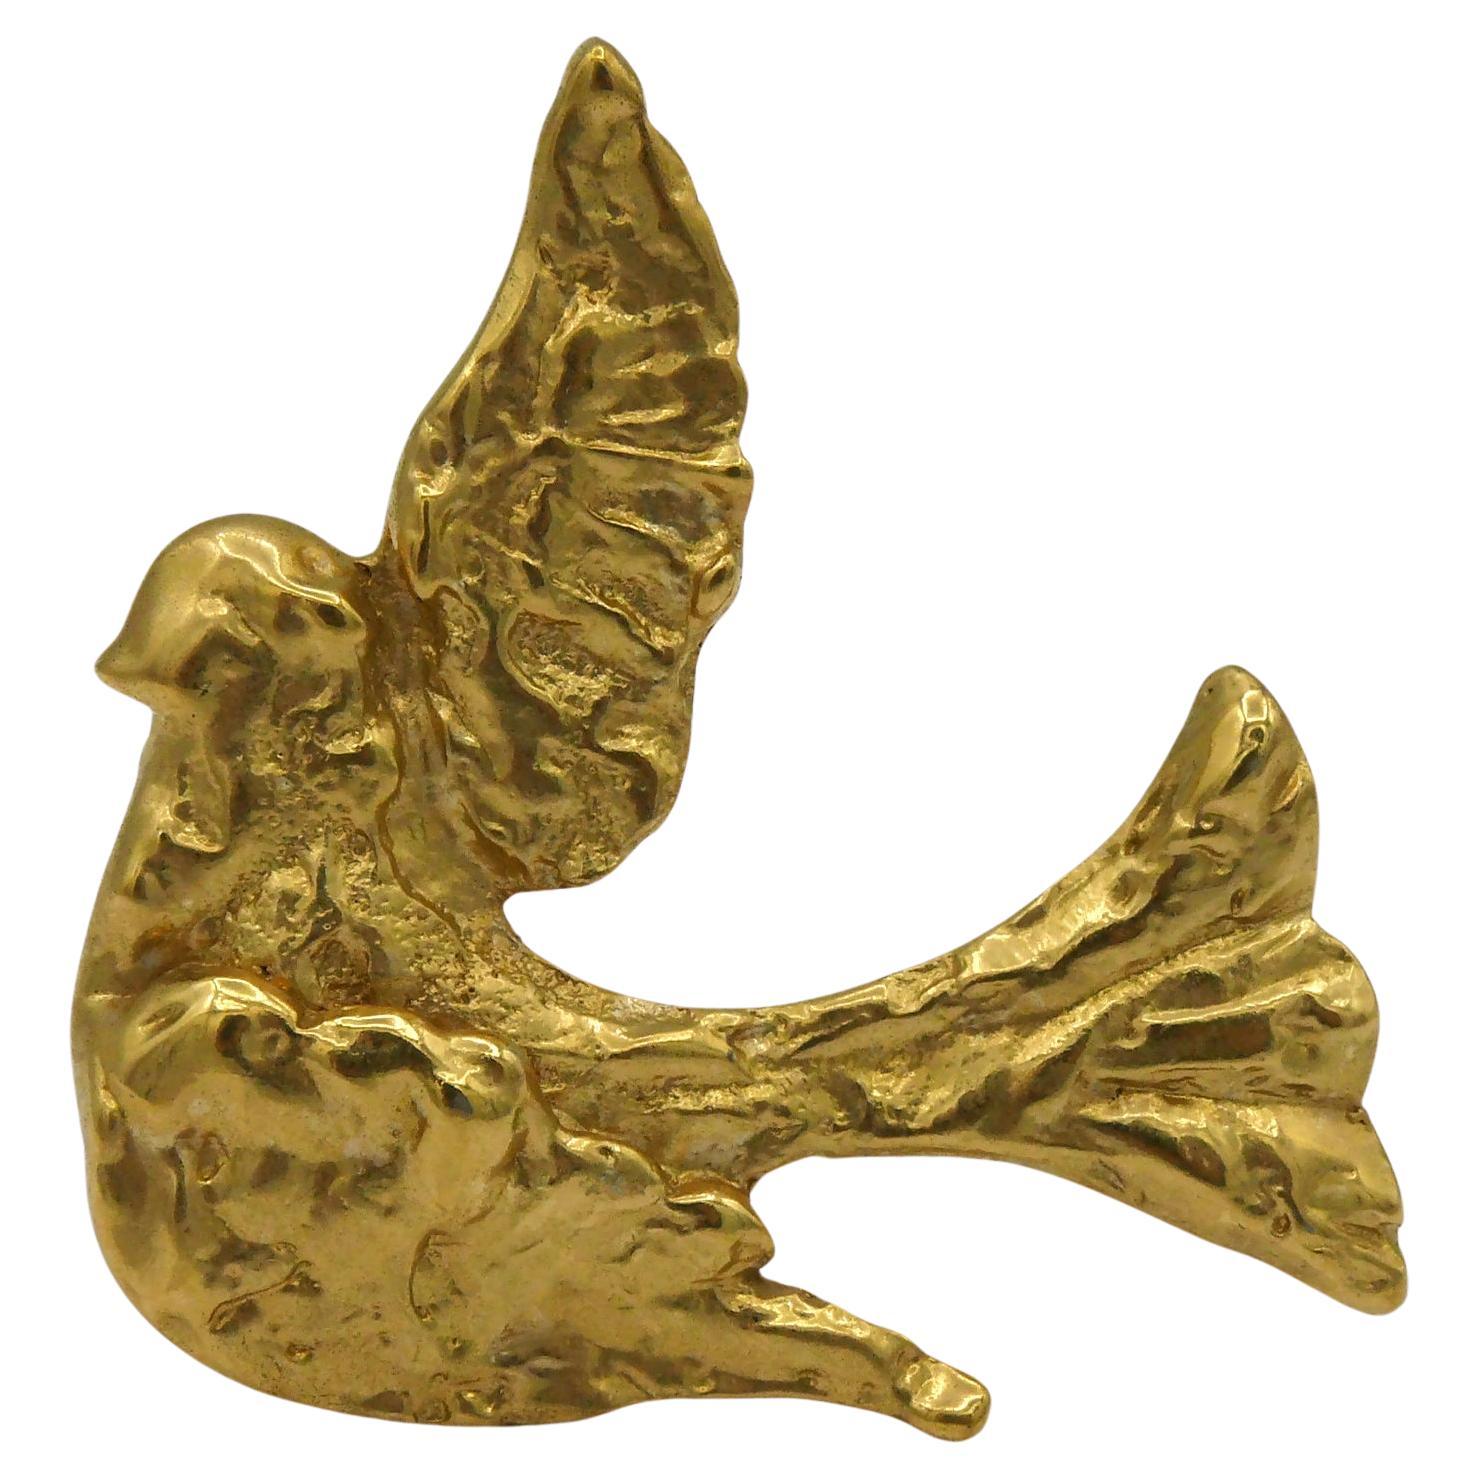 YVES SAINT LAURENT YSL Vintage Goldfarbene Brosche mit strukturiertem Vogelmotiv in Goldtönen